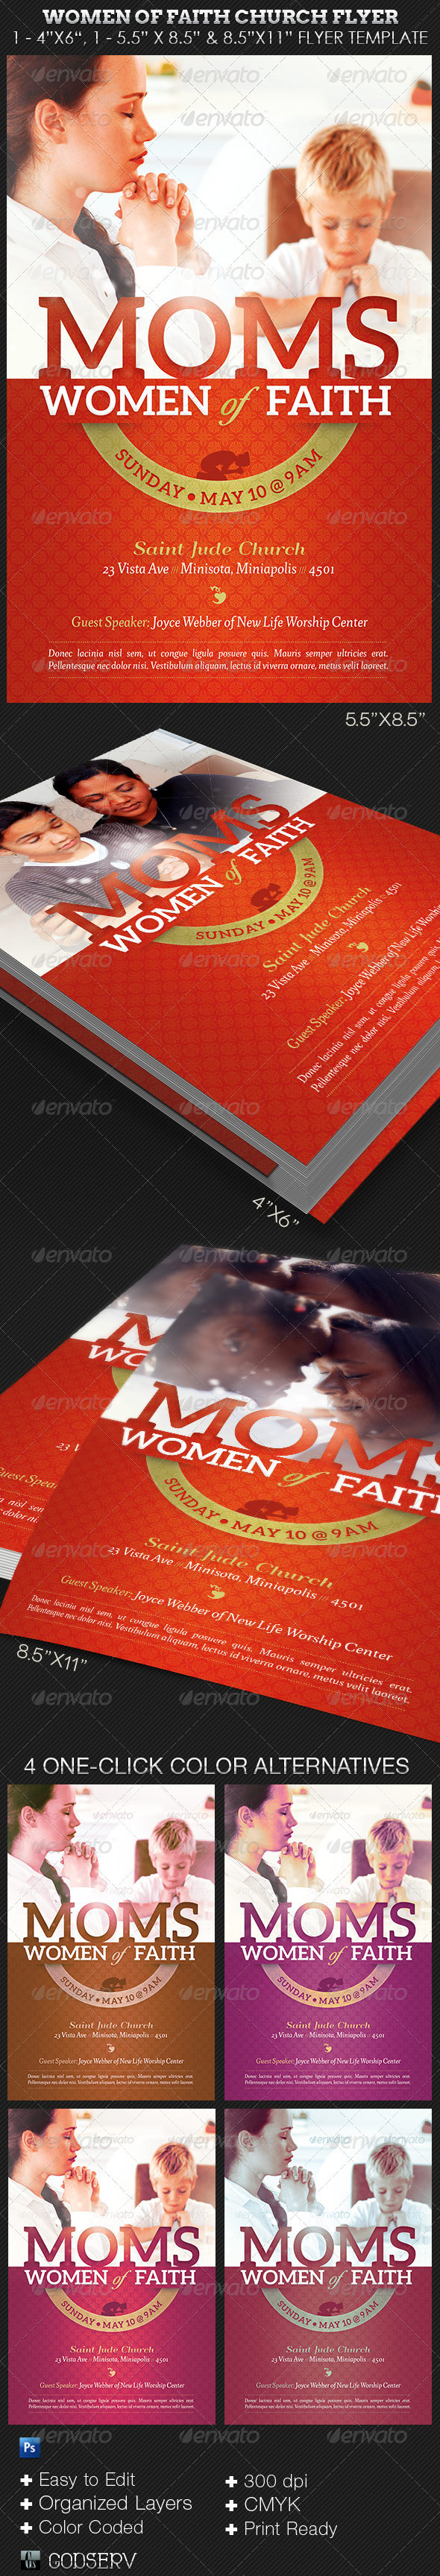 Women of faith church flyer template preview